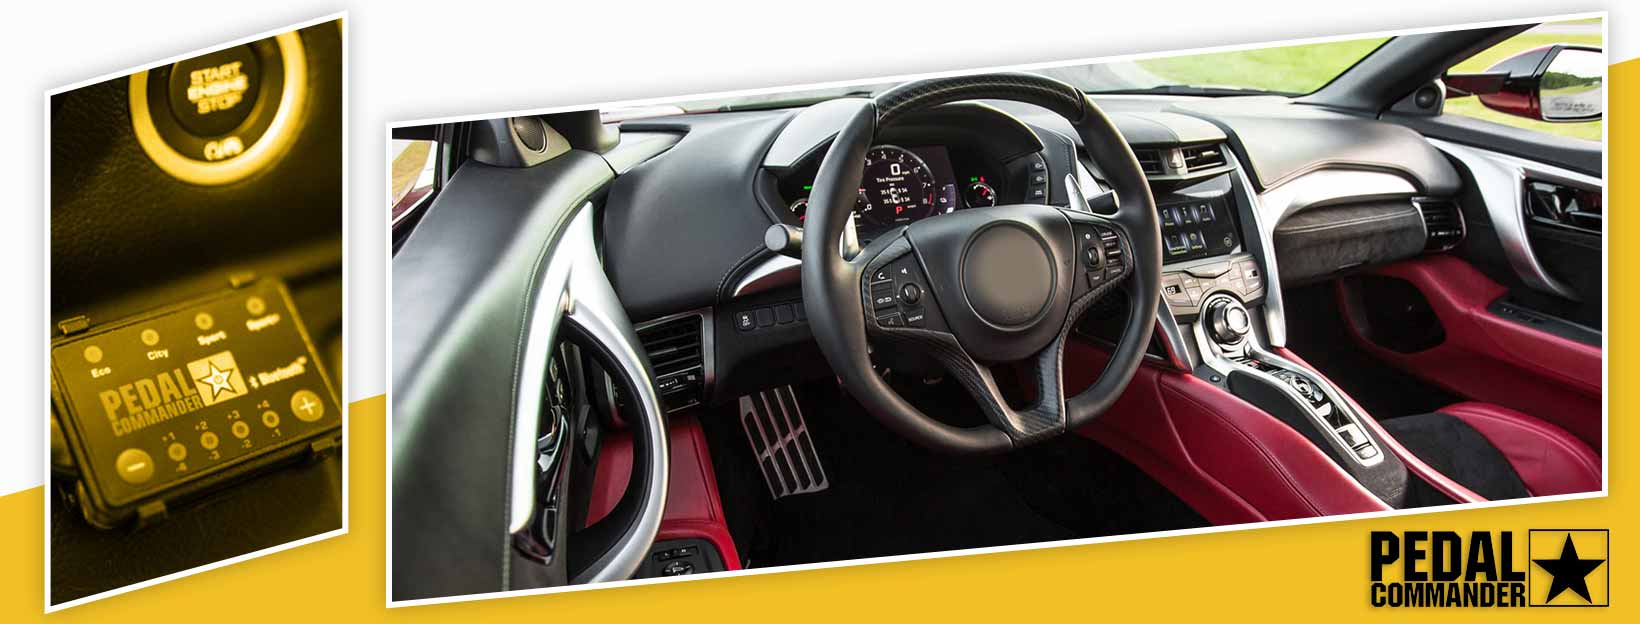 Pedal Commander for Acura NSX - interior